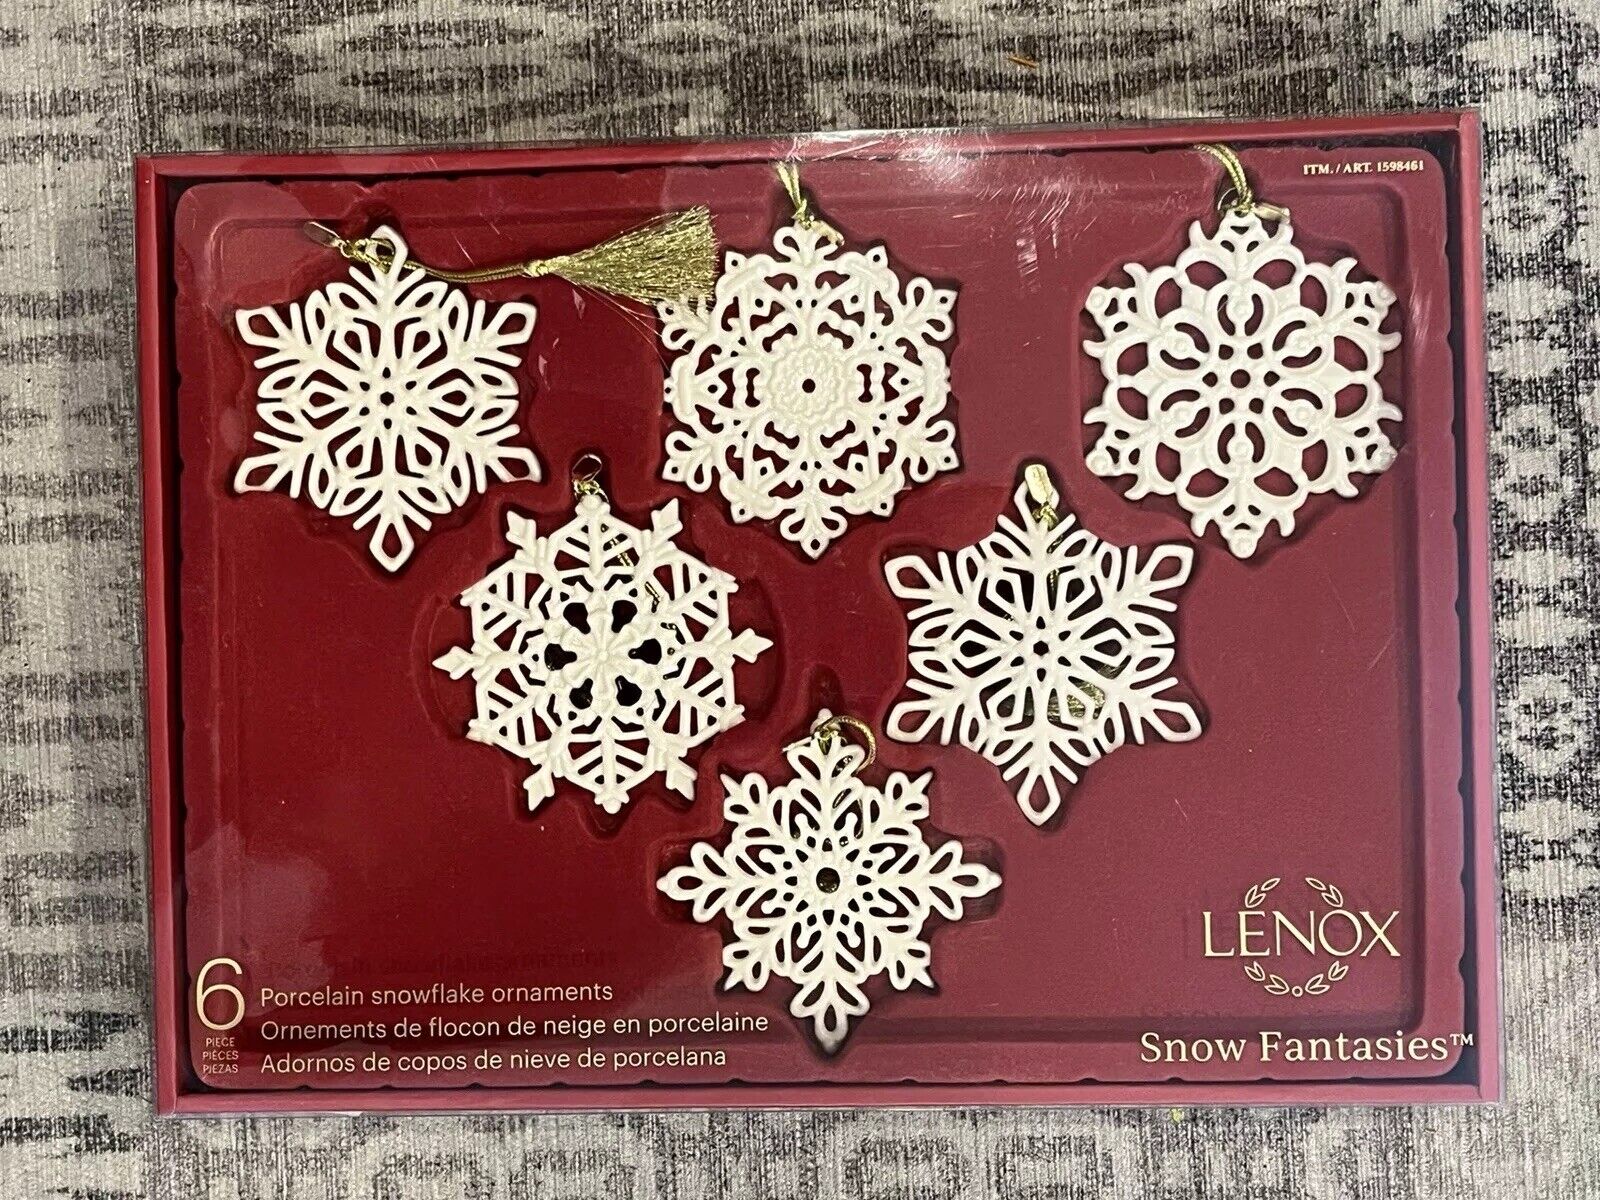 Lenox Snow Fantasies Porcelain Snowflake Ornaments Set of 6 in Box